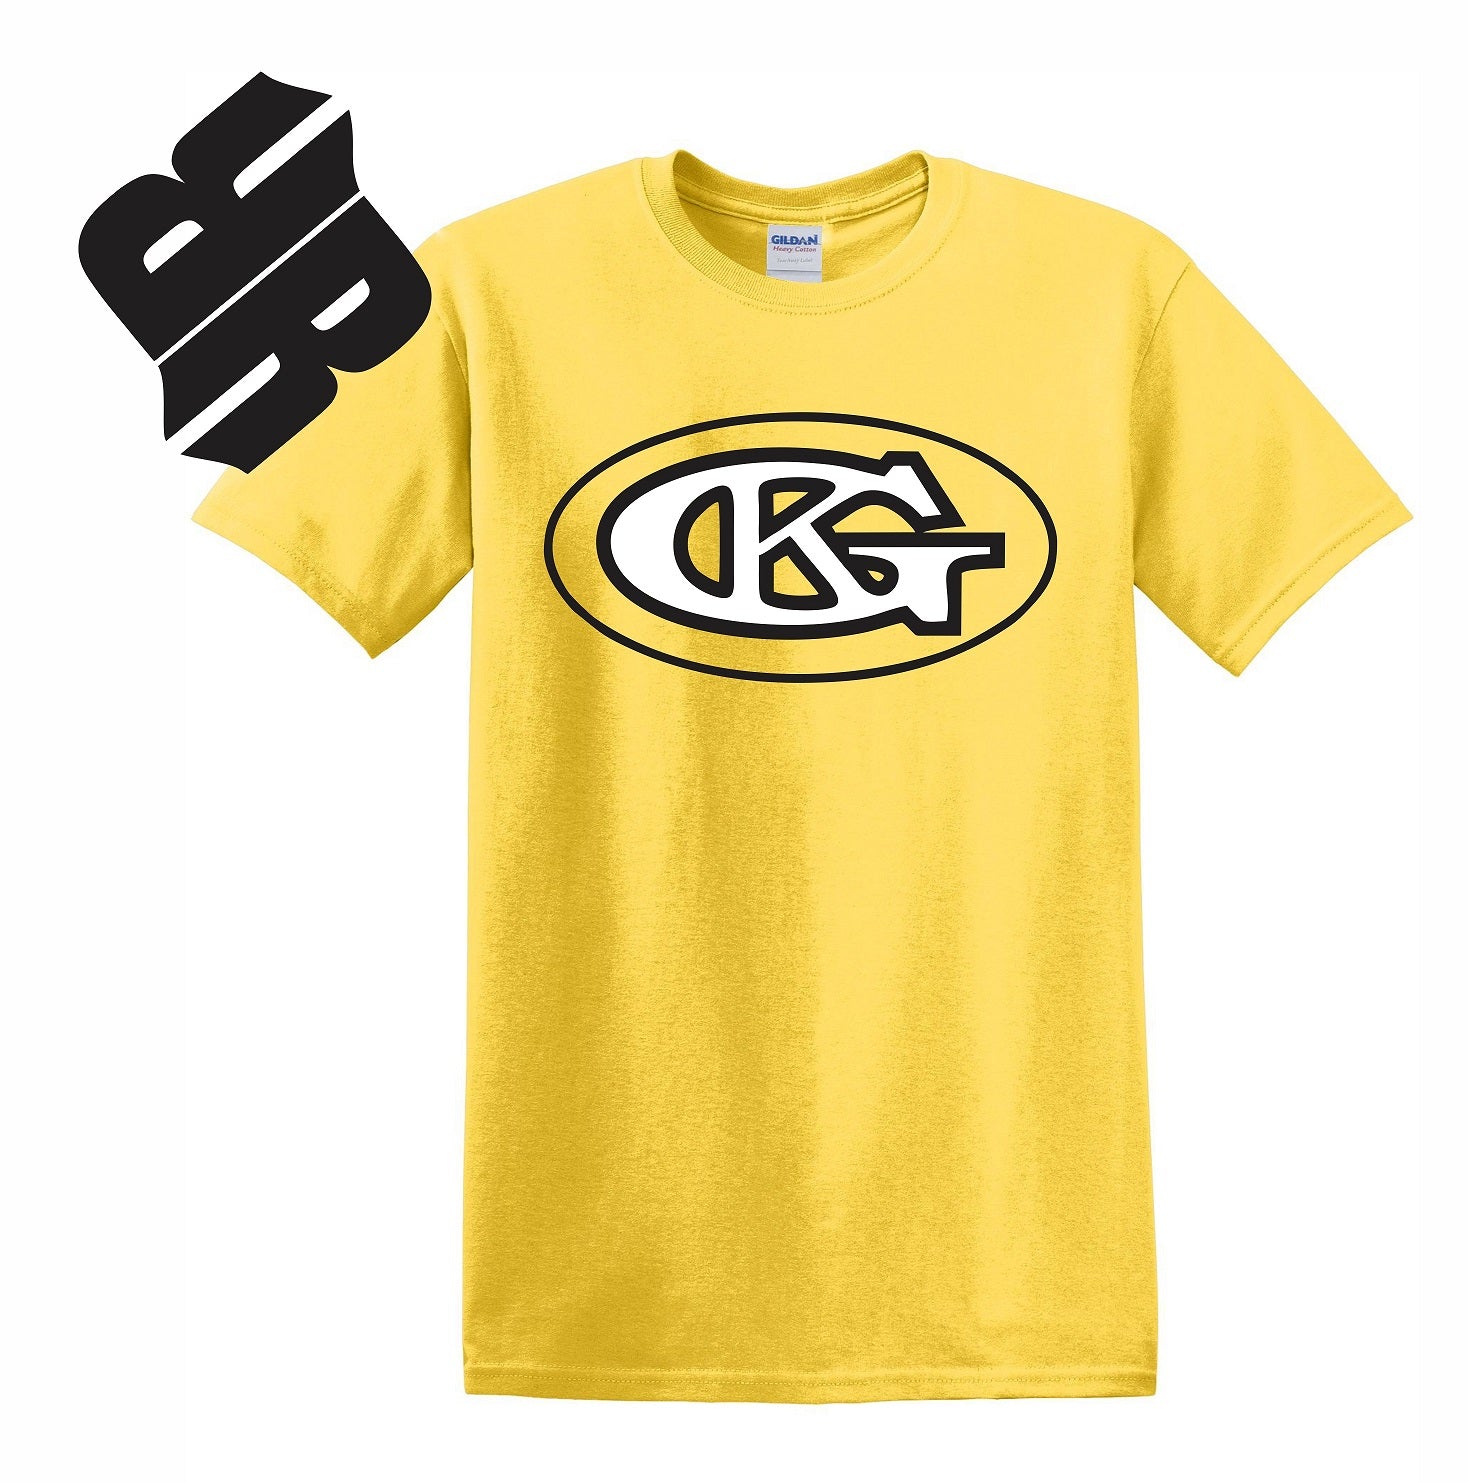 Skate Men's Shirt - CKG (Yellow) - MYSTYLEMYCLOTHING